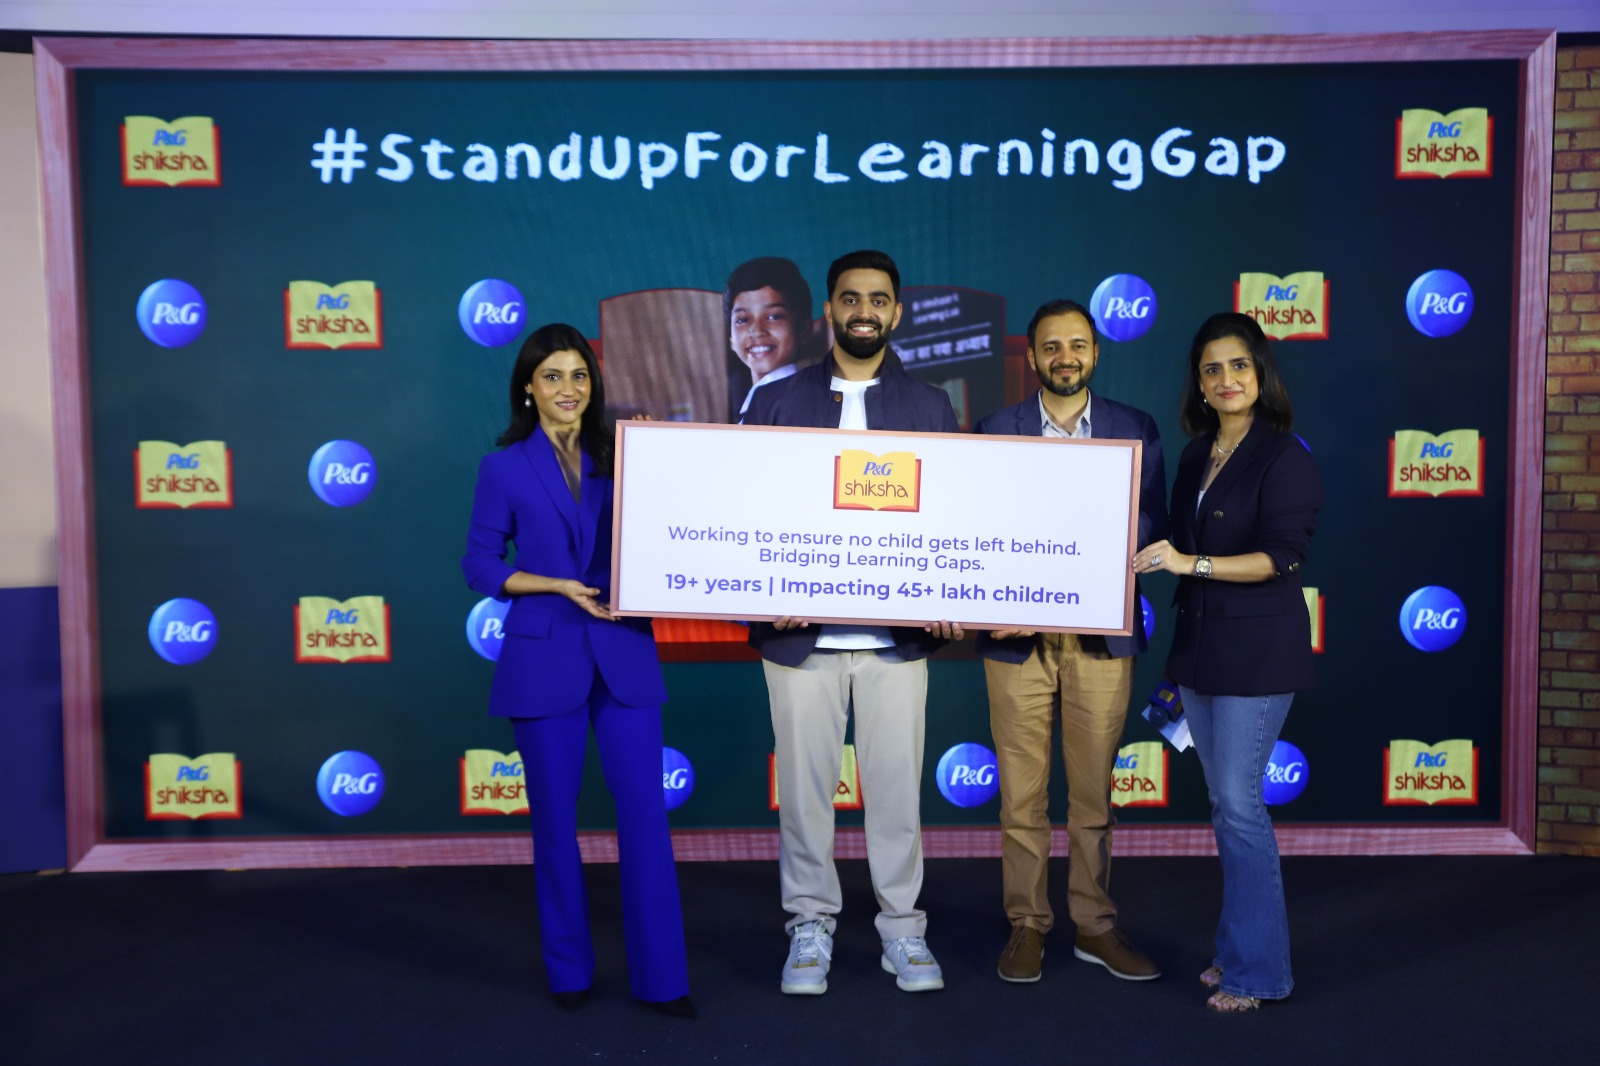 P&G Shiksha Launches #StandUpForLearningGaps Campaign to Address Education Inequities